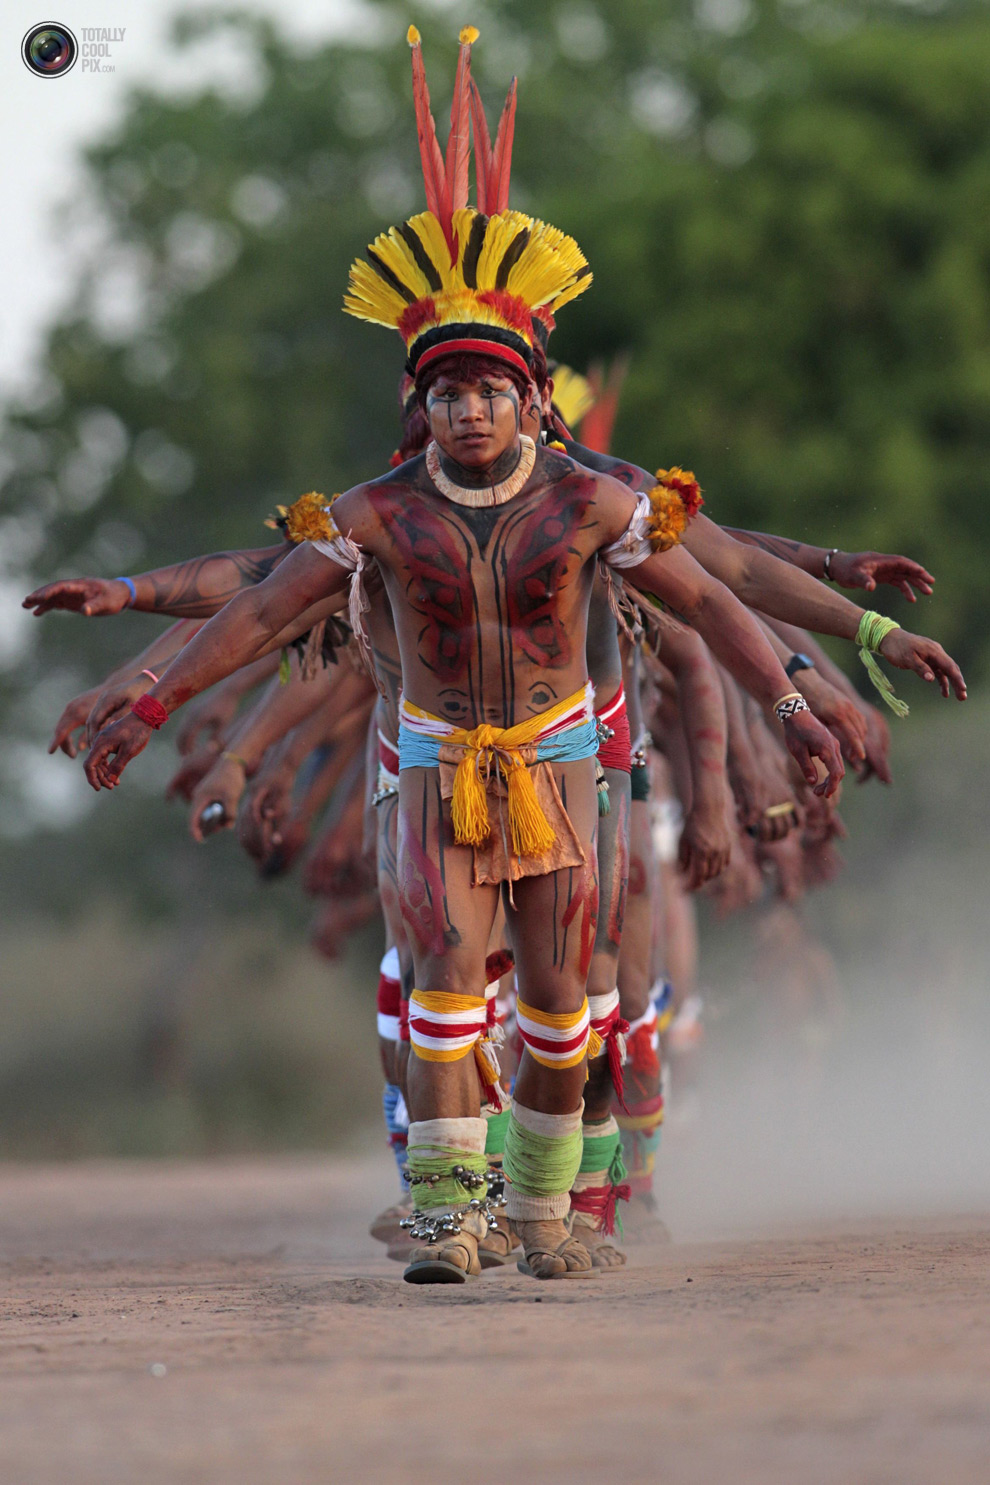 O olhar do fotojornalista Ueslei Marcelino (REUTERS) no ritual do Kuarup, no Alto Xingu.